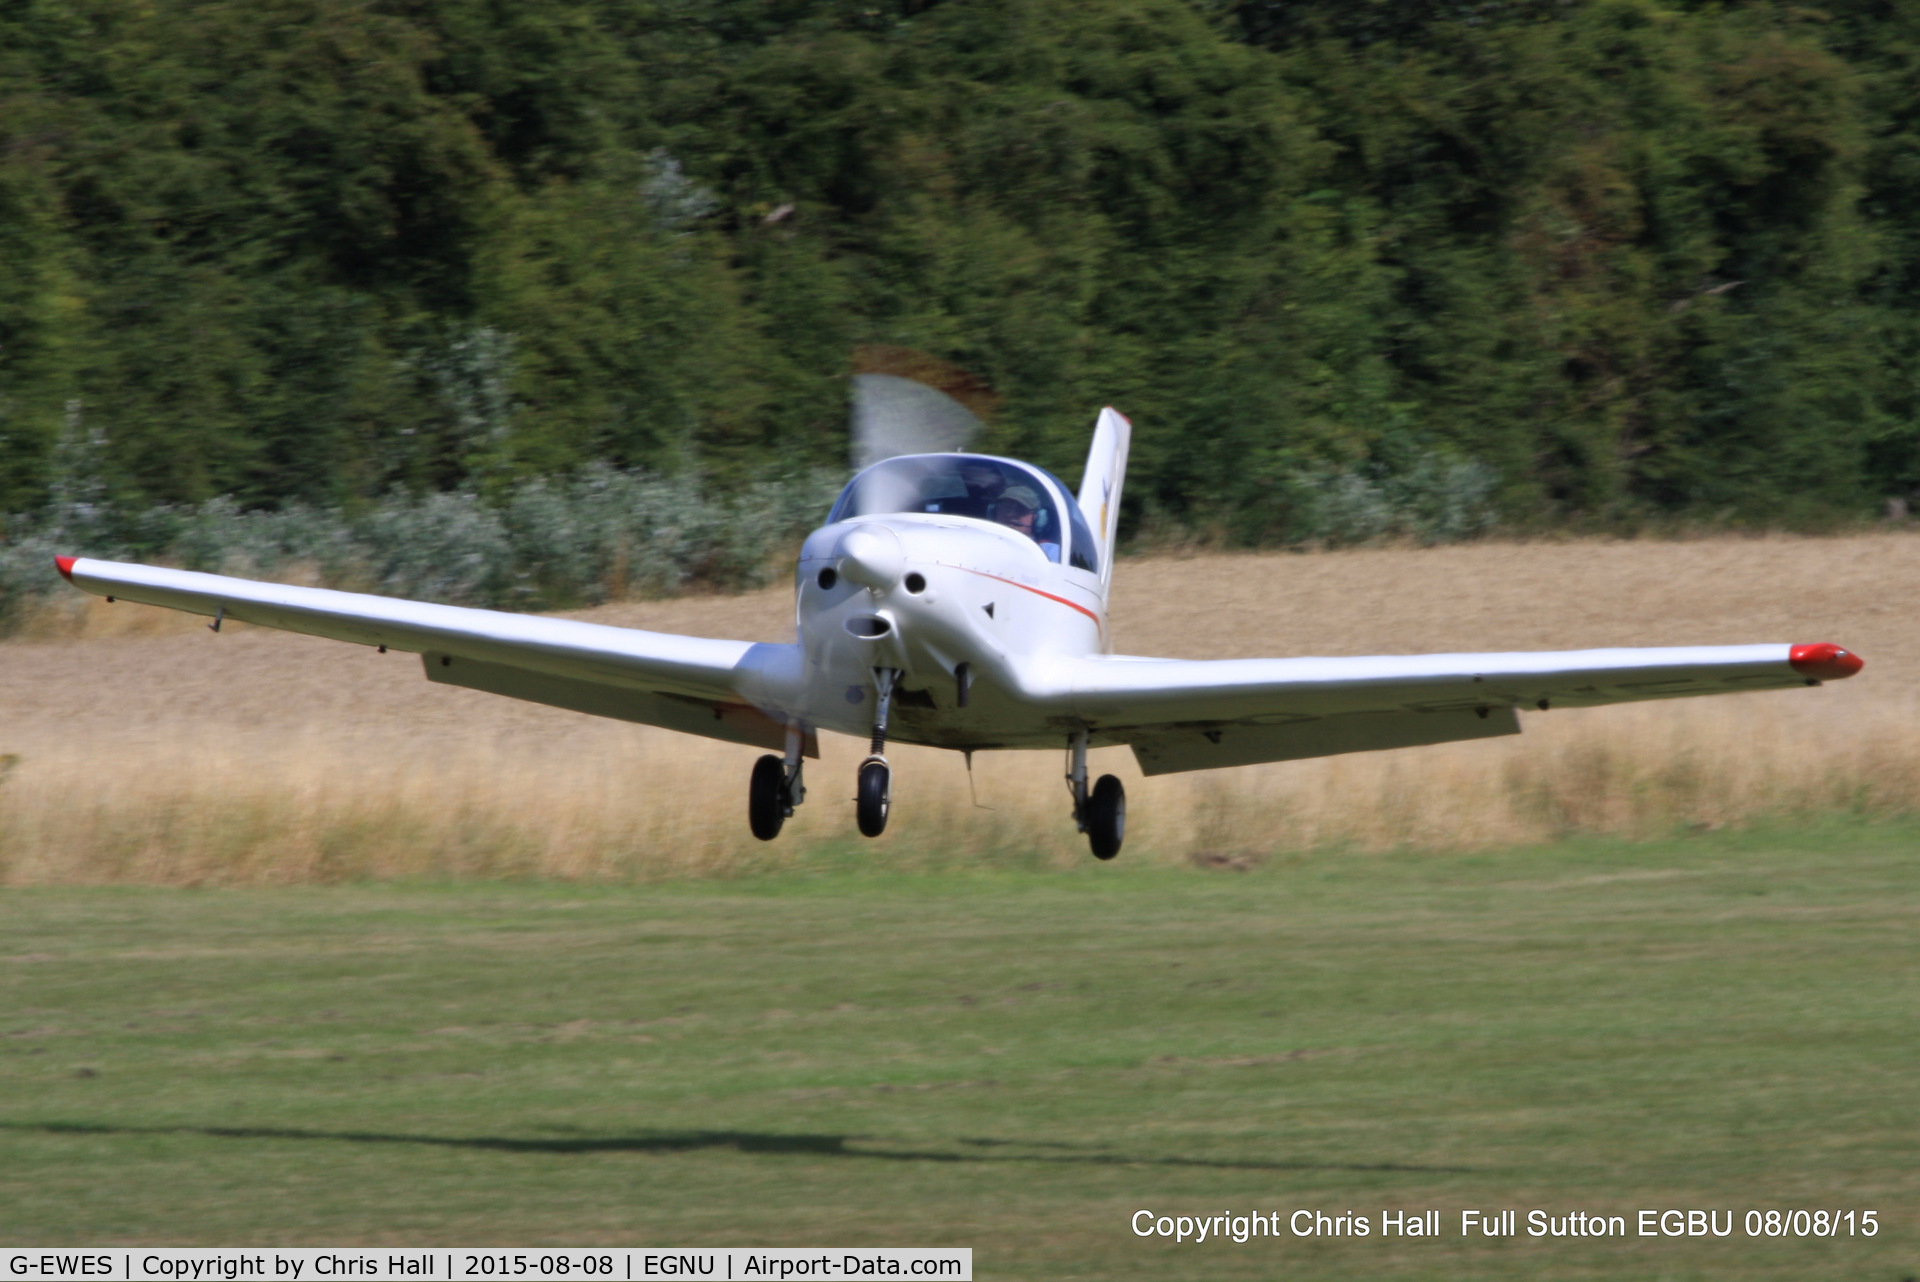 G-EWES, 2004 Alpi Aviation Pioneer 300 C/N PFA 330-14322, at the Vale of York LAA strut flyin, Full Sutton